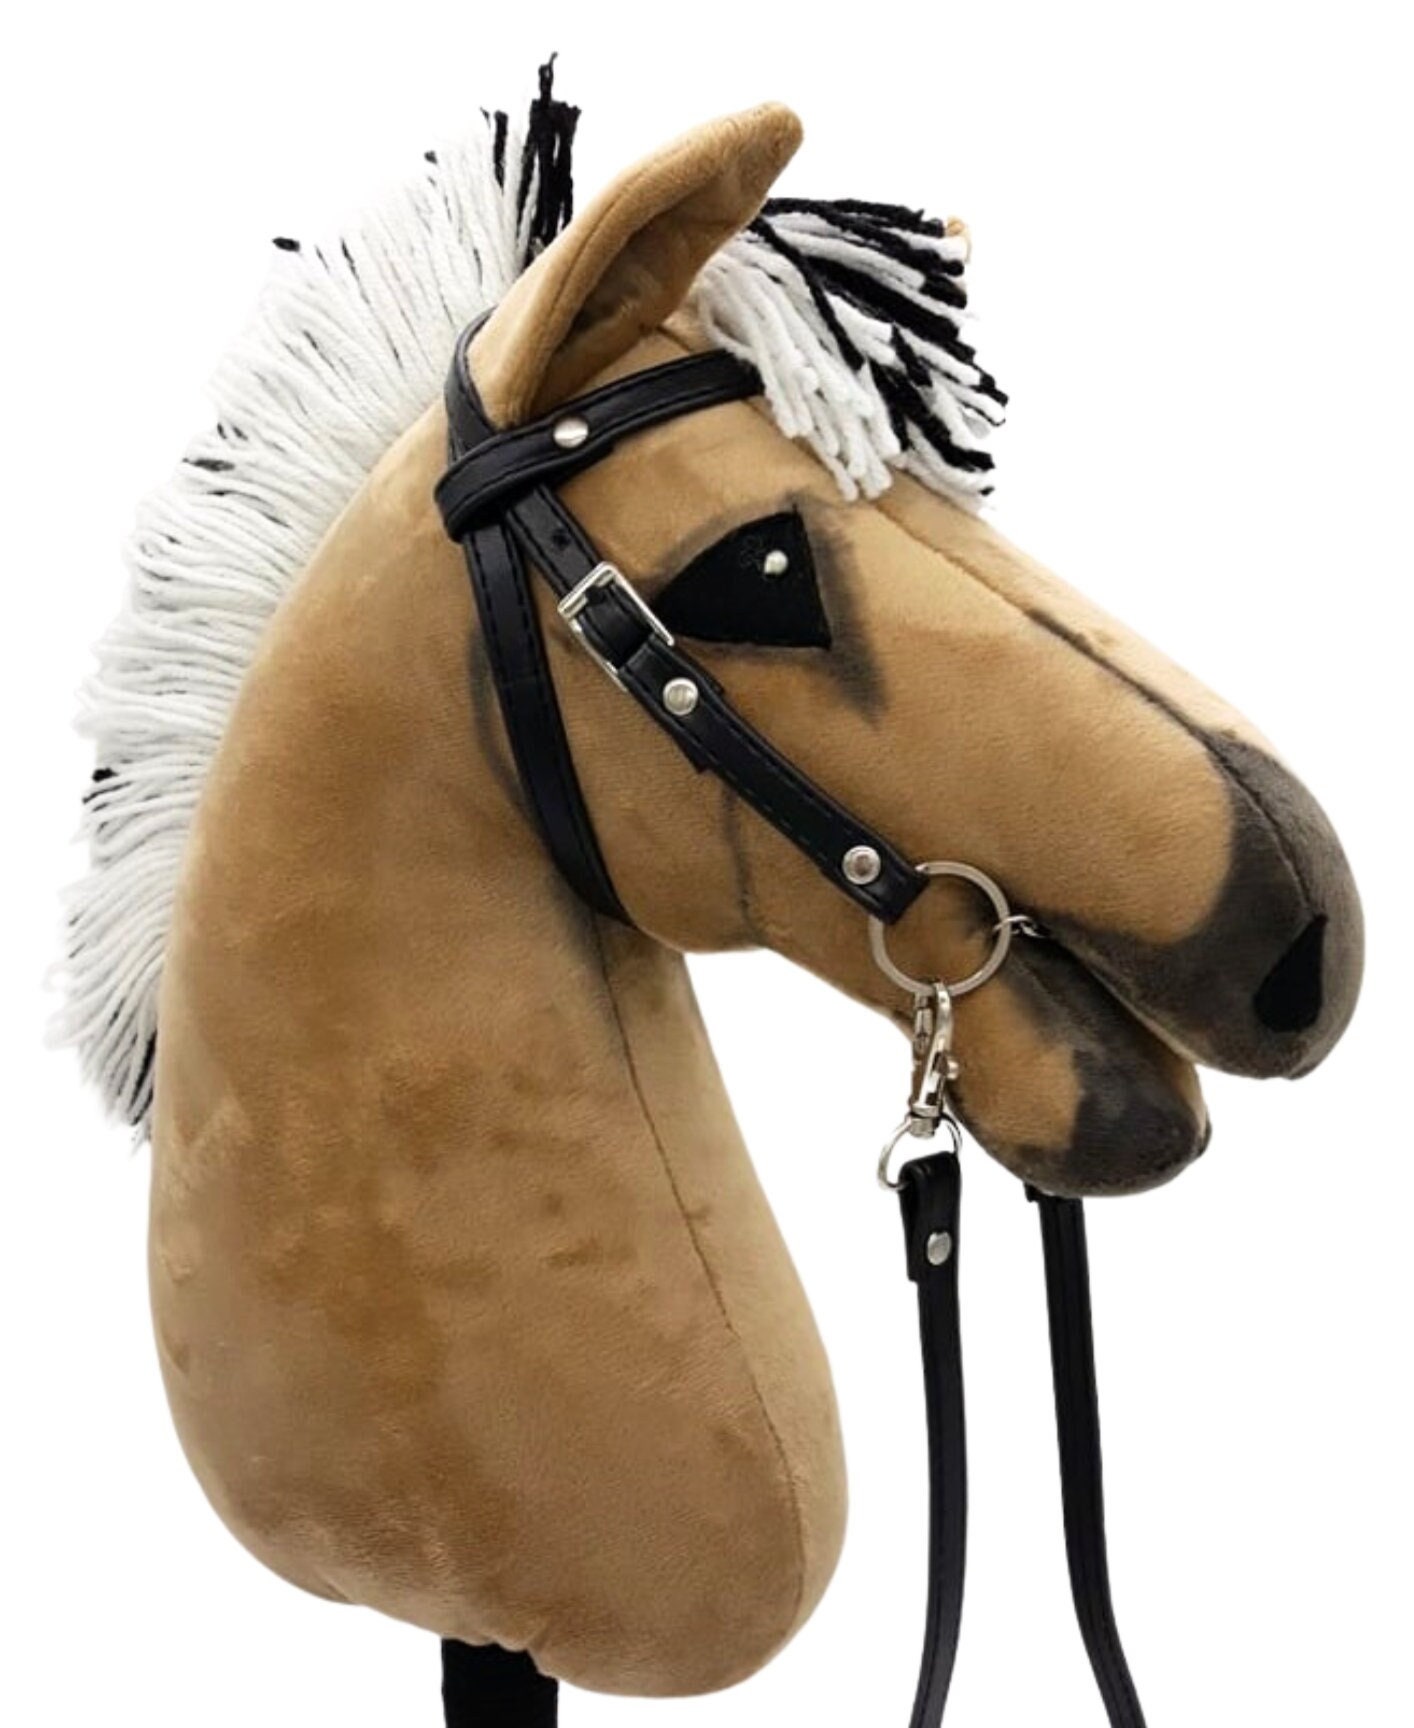 Hobby horse fiord, hobby horse, hobby horse with bridle, steckenpferd, horse  on a stick, hobbyhorse, fiord, realistic hobby horse